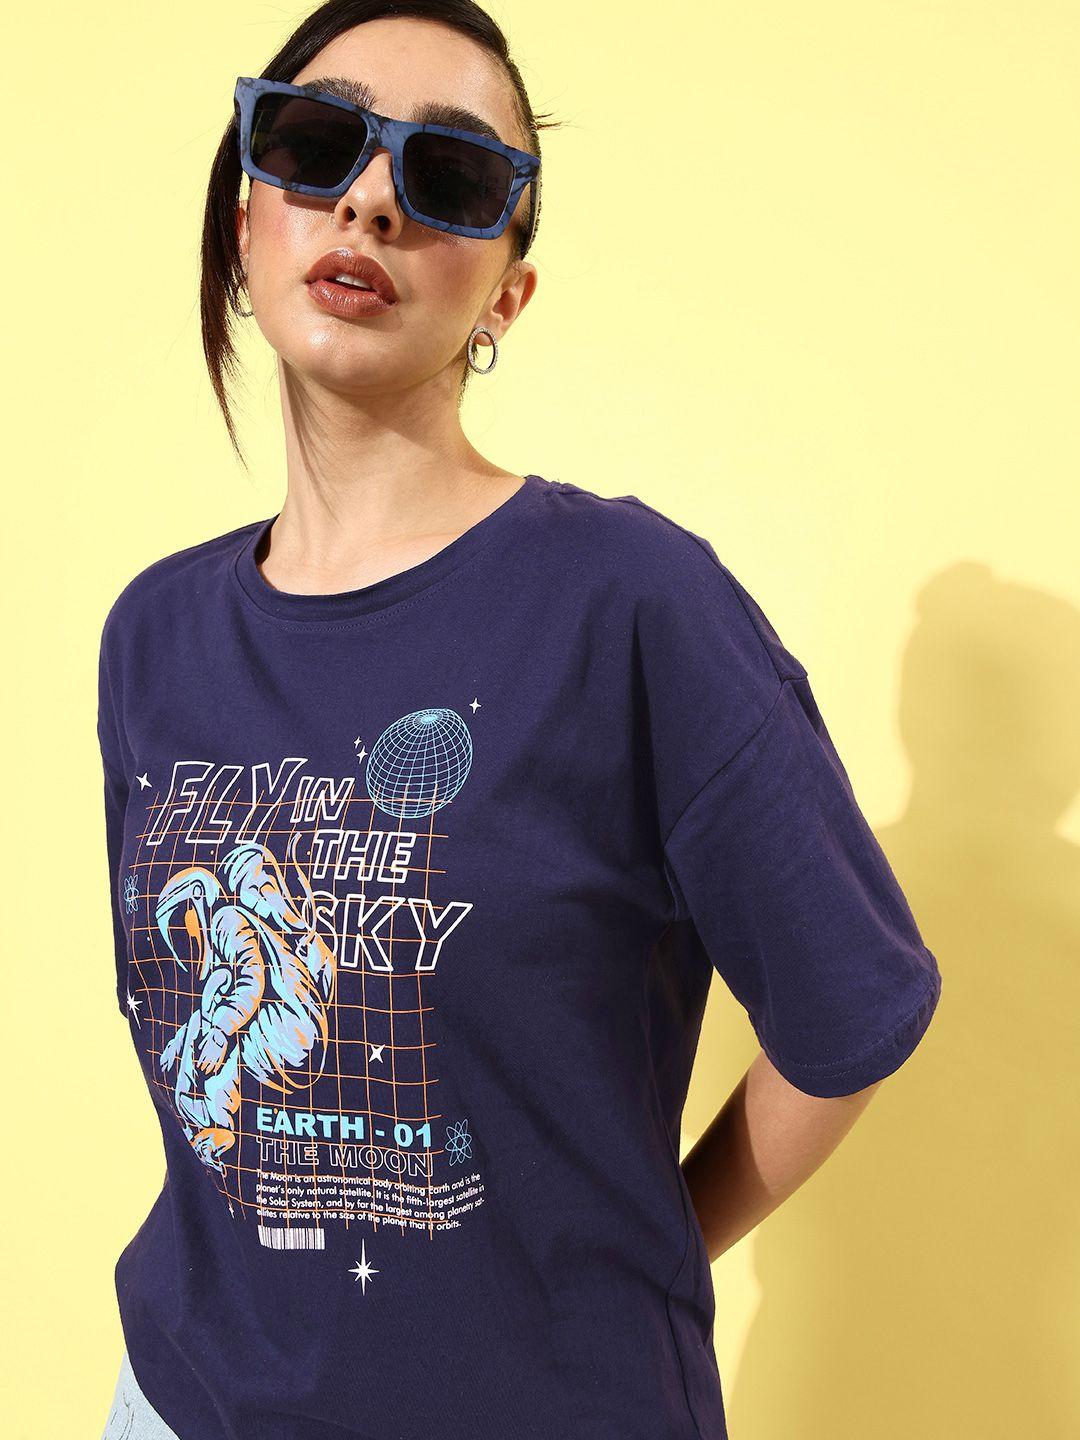 4wrd by dressberry women printed drop-shoulder t-shirt